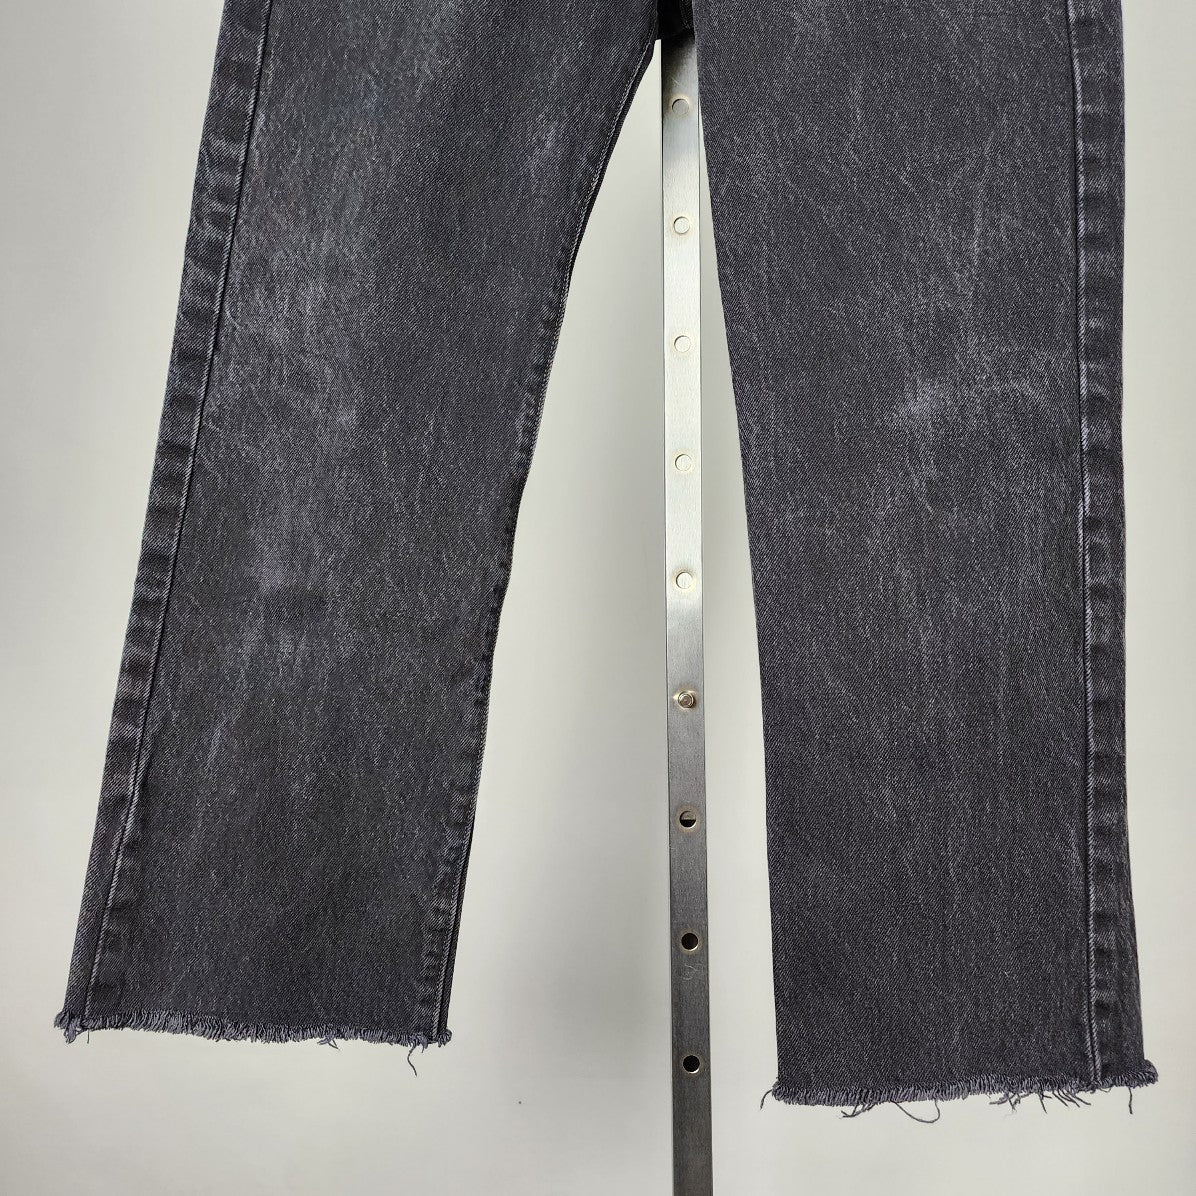 Levi's 501 Black Cotton Raw Hem Jeans Size 31/32